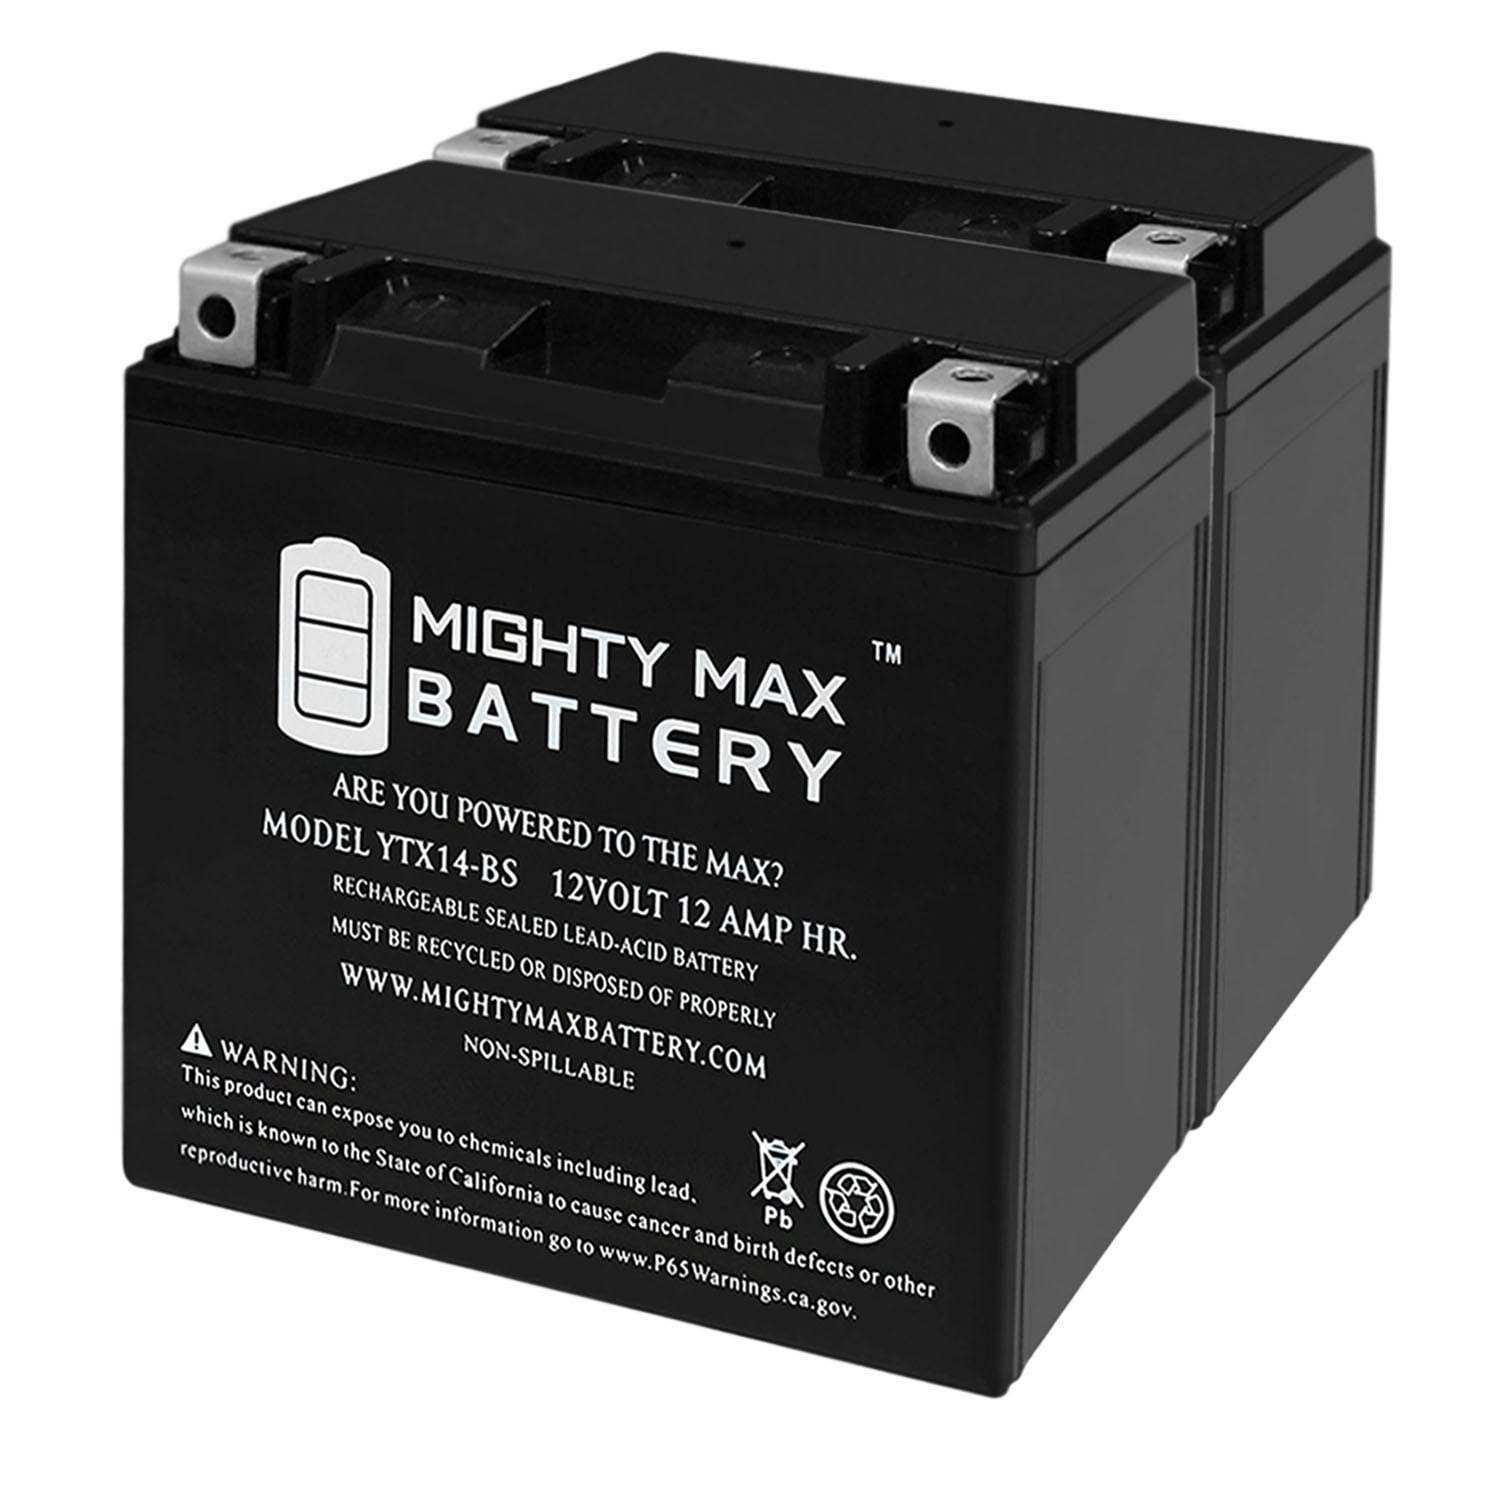 Max battery. Ytx14-BS. Duralast аккумуляторы. ВТХ-14bs характеристики аккумулятора. YTX.